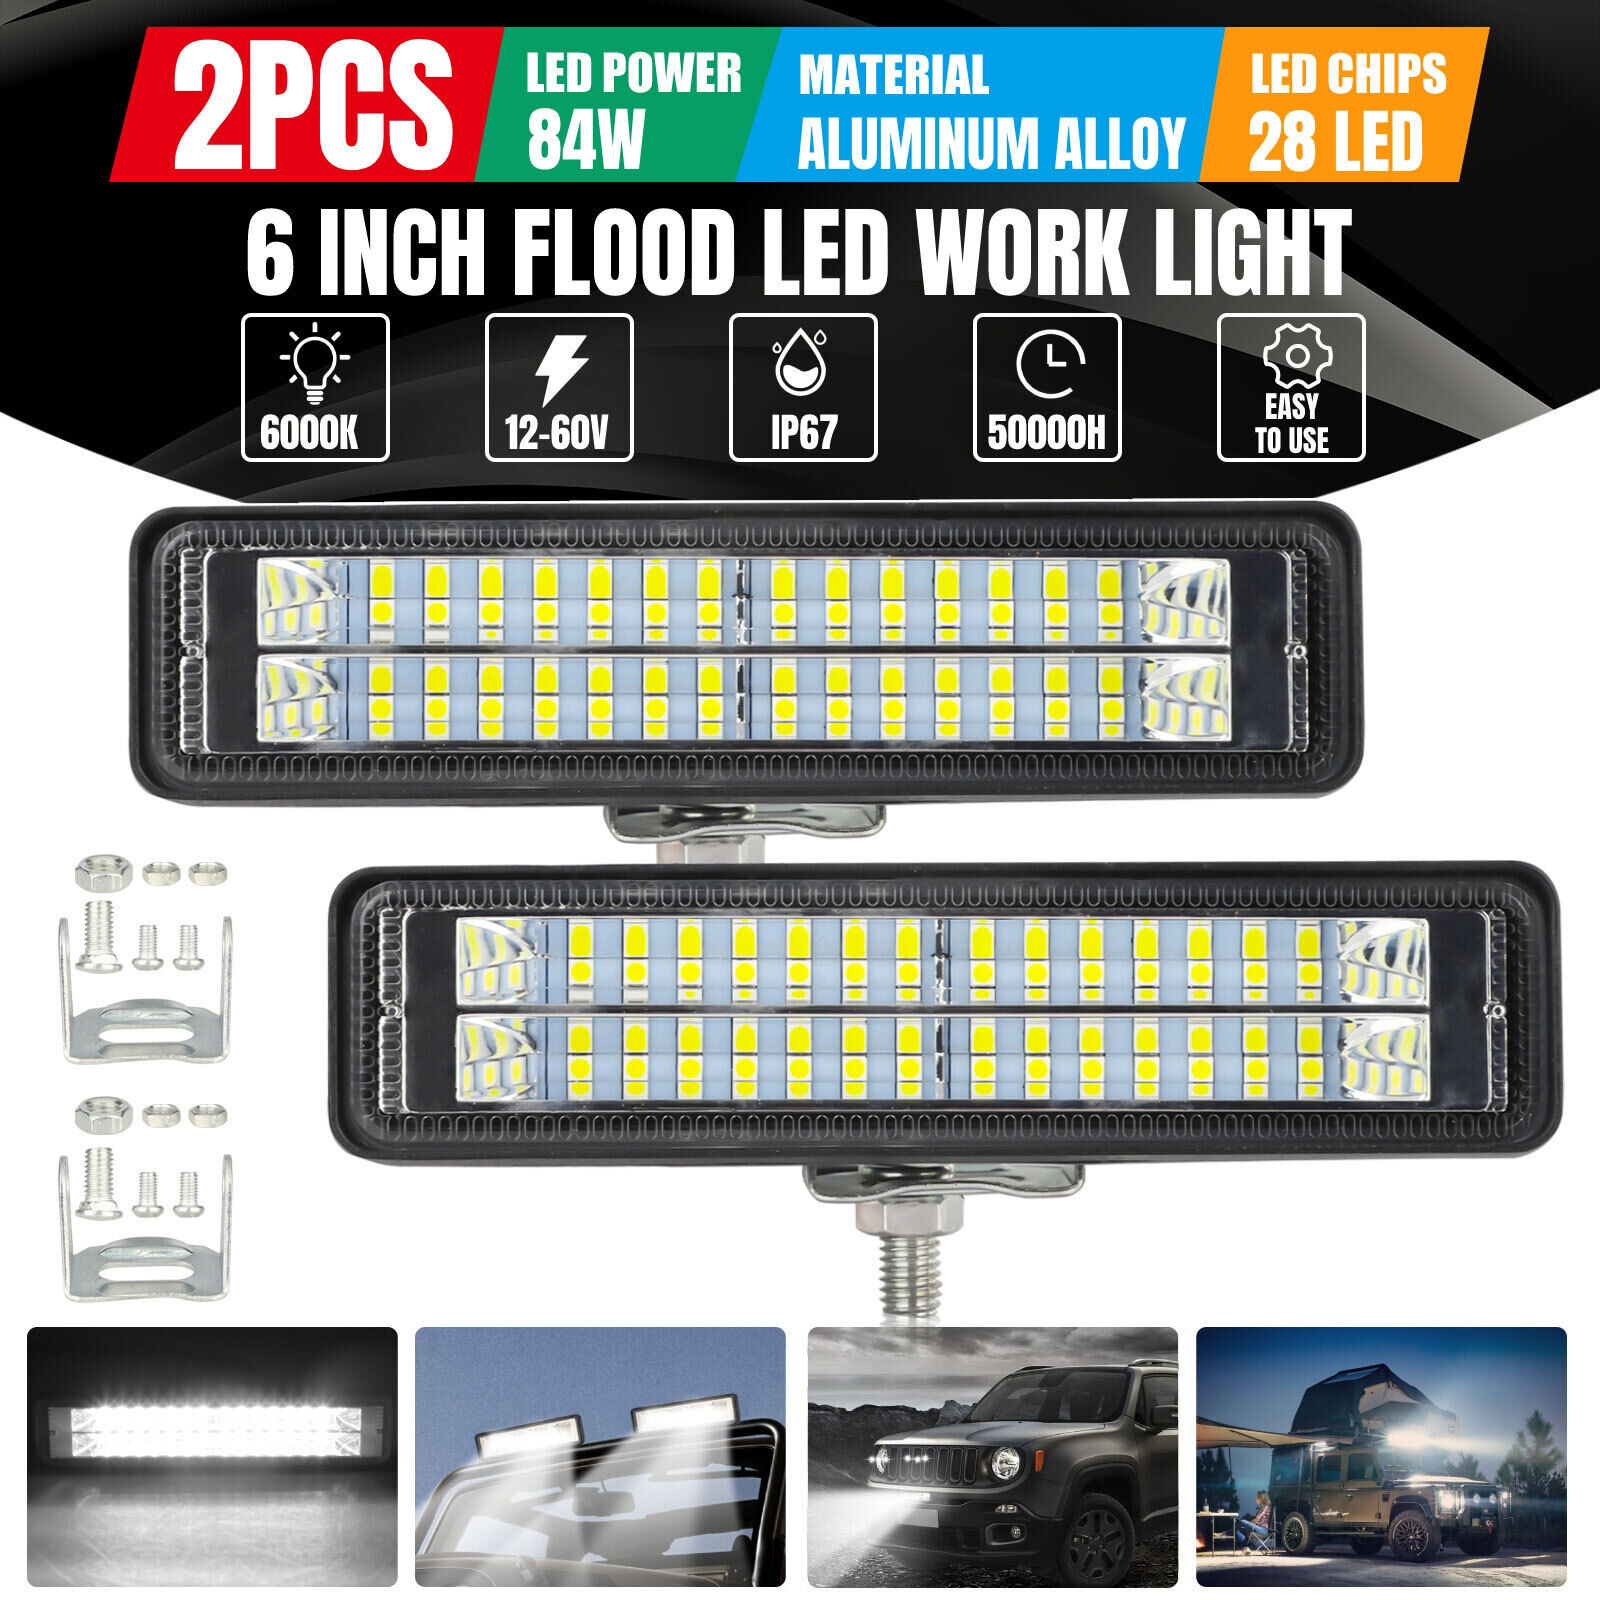 2x 6inch 84W LED Work Light Bar Flood Fog Lamp Offroad Driving Truck SUV ATV 4WD